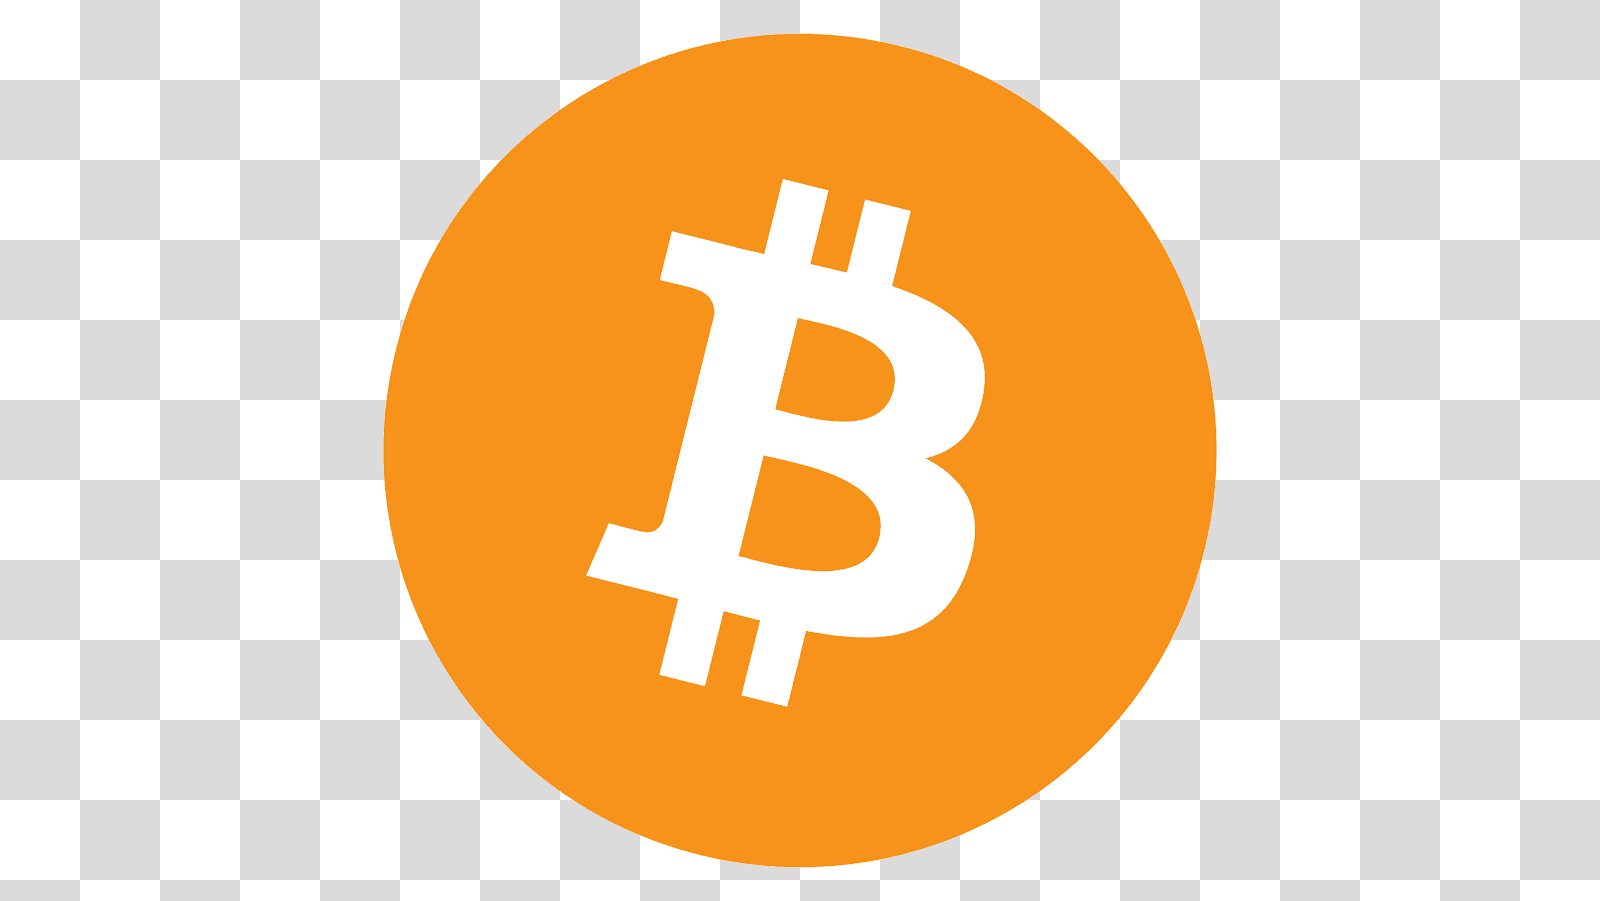 Bitcoin (BTC) Icon PNG Transparent Image